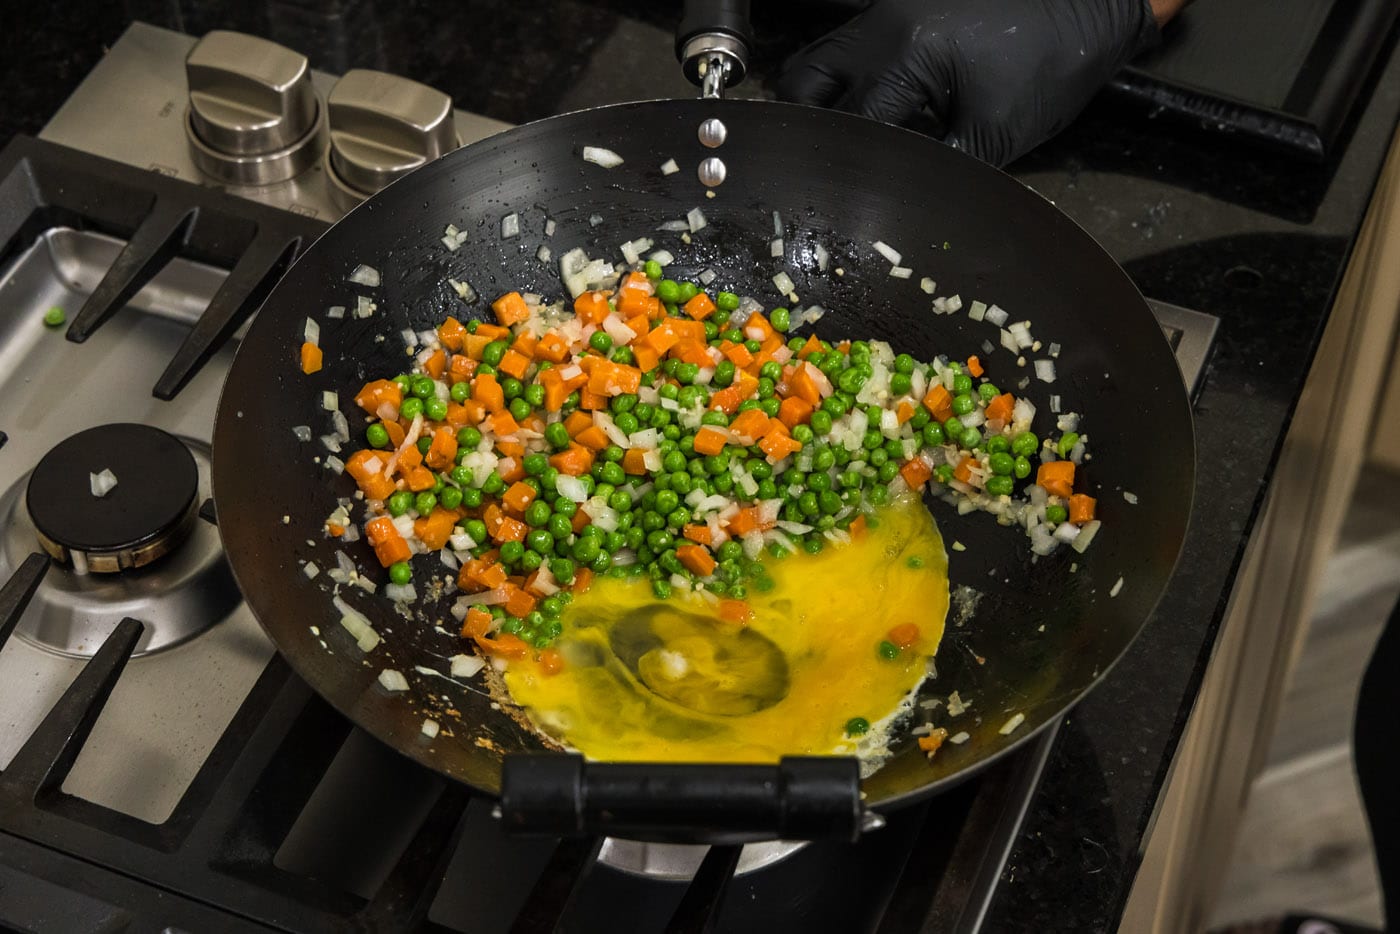 eggs scrambling next to stir fried vegetables